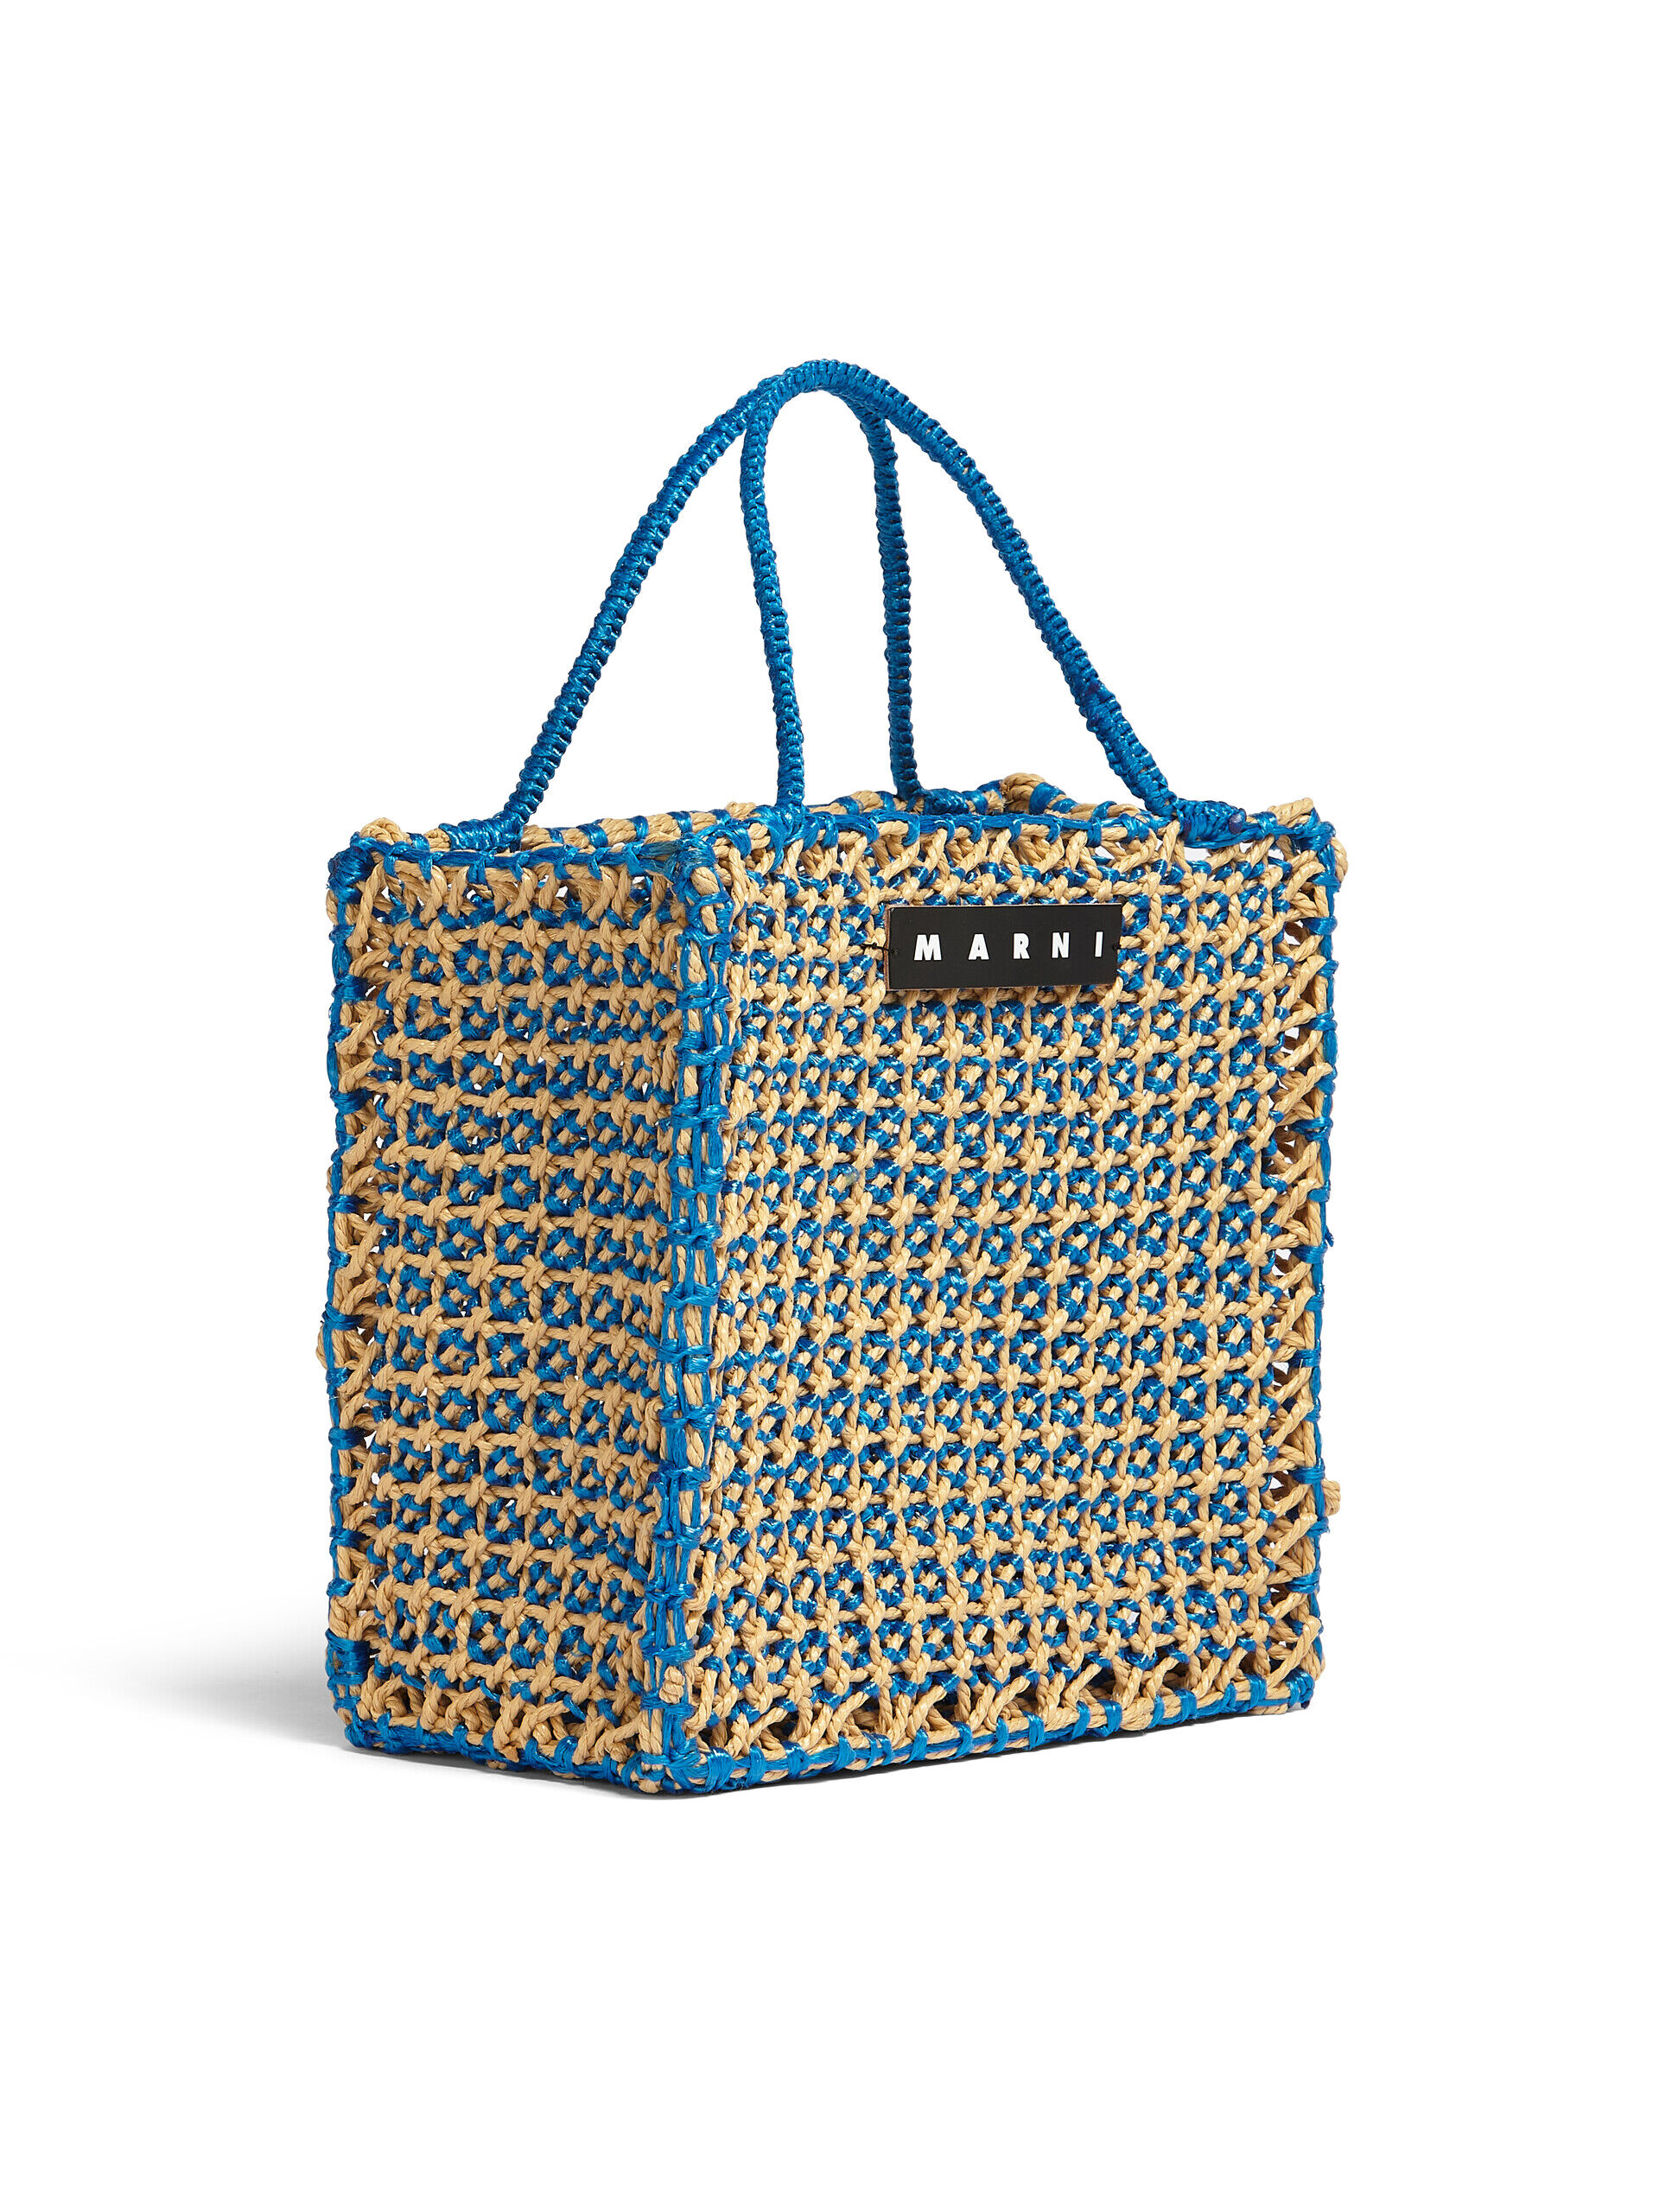 MARNI MARKET JURTA large bag in pale blue and beige crochet | Marni